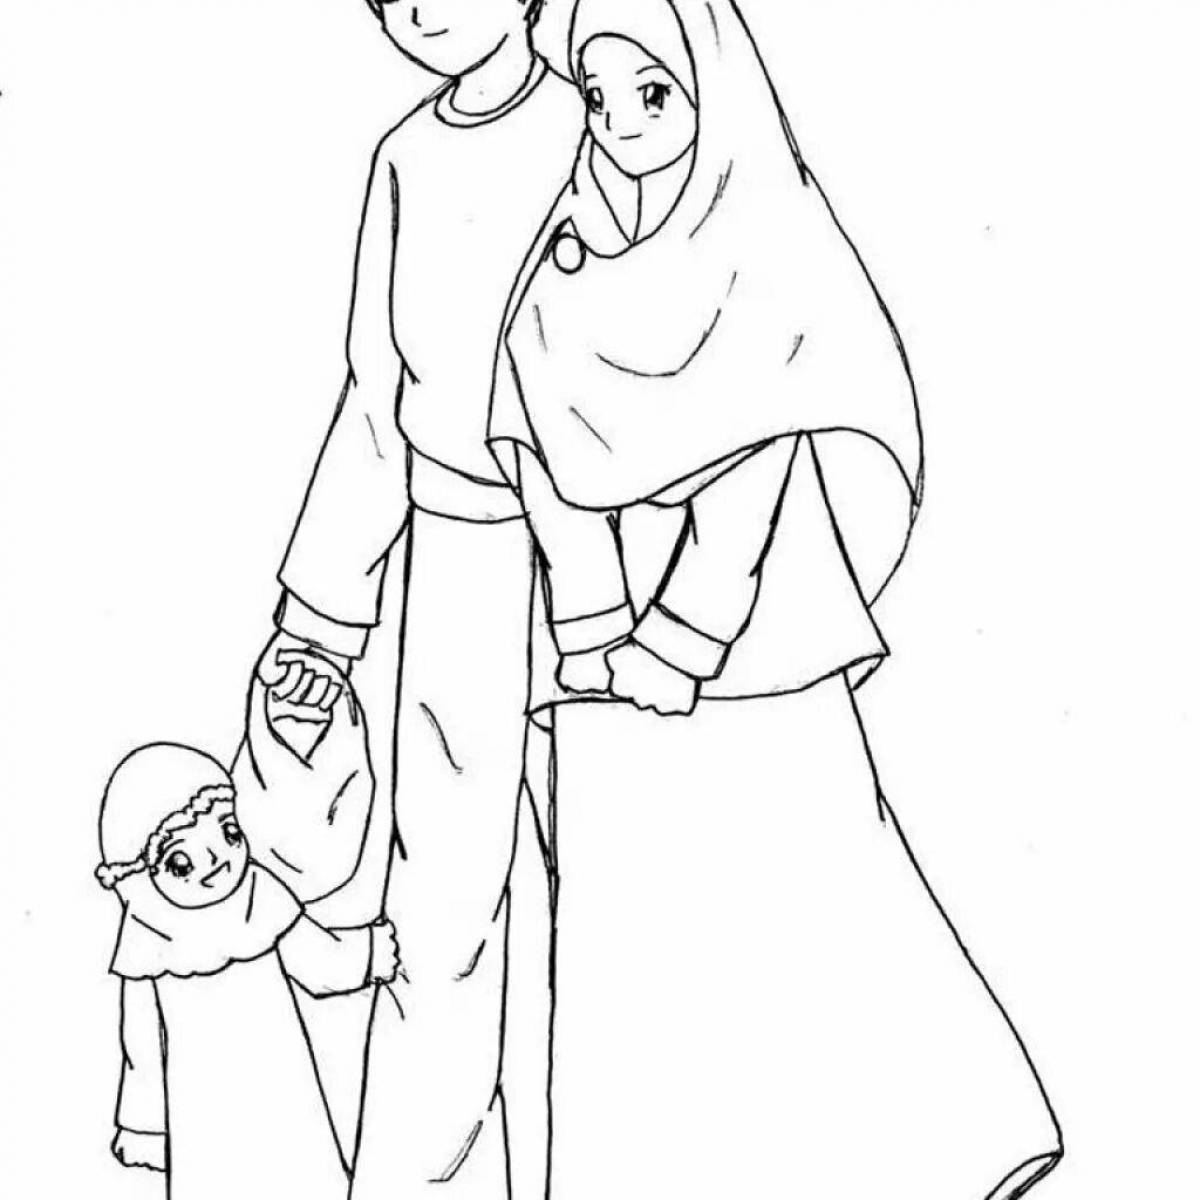 Muslim family #8